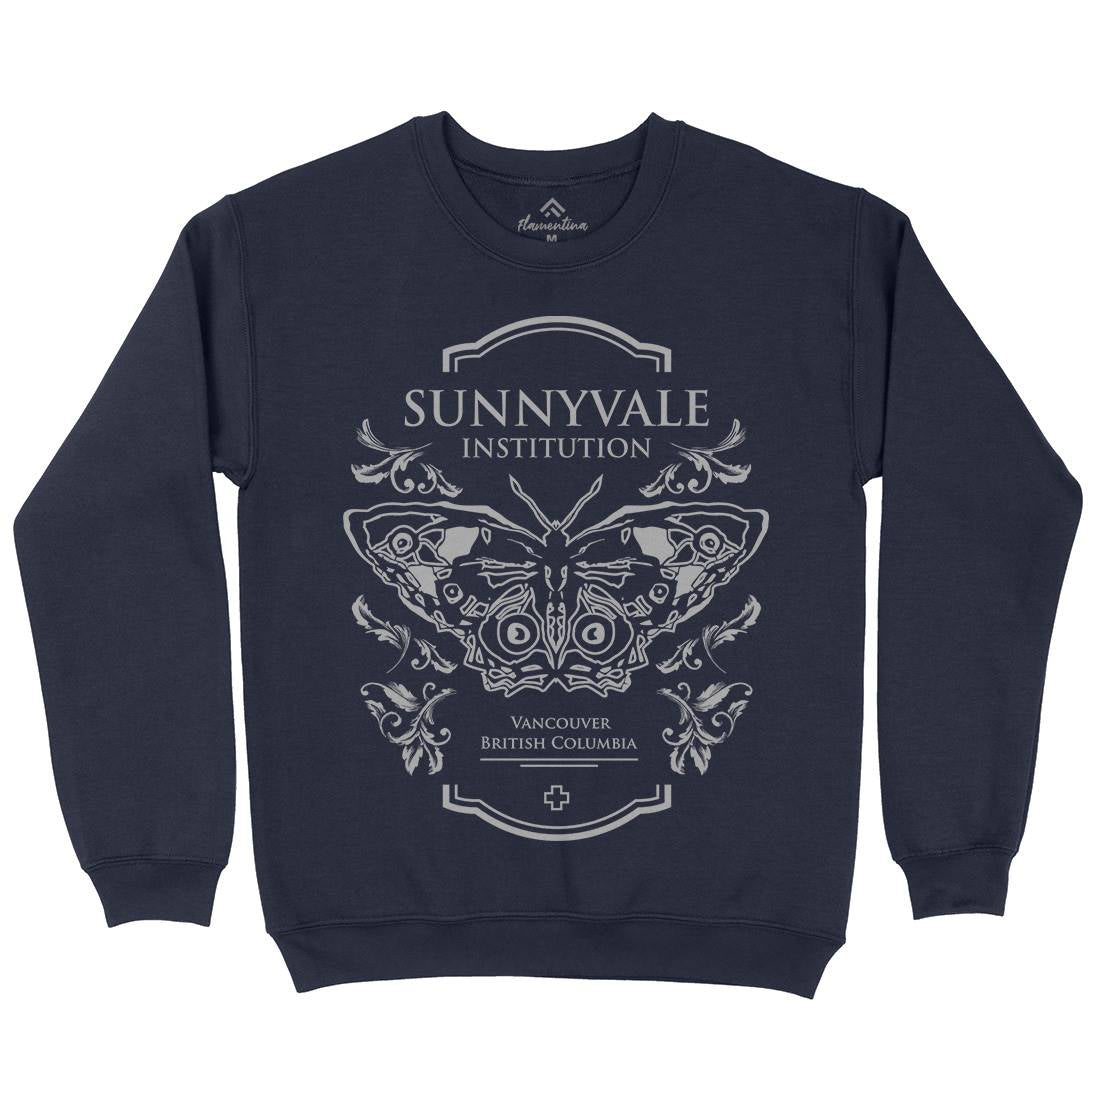 Sunnyvale Institution Kids Crew Neck Sweatshirt Space D232